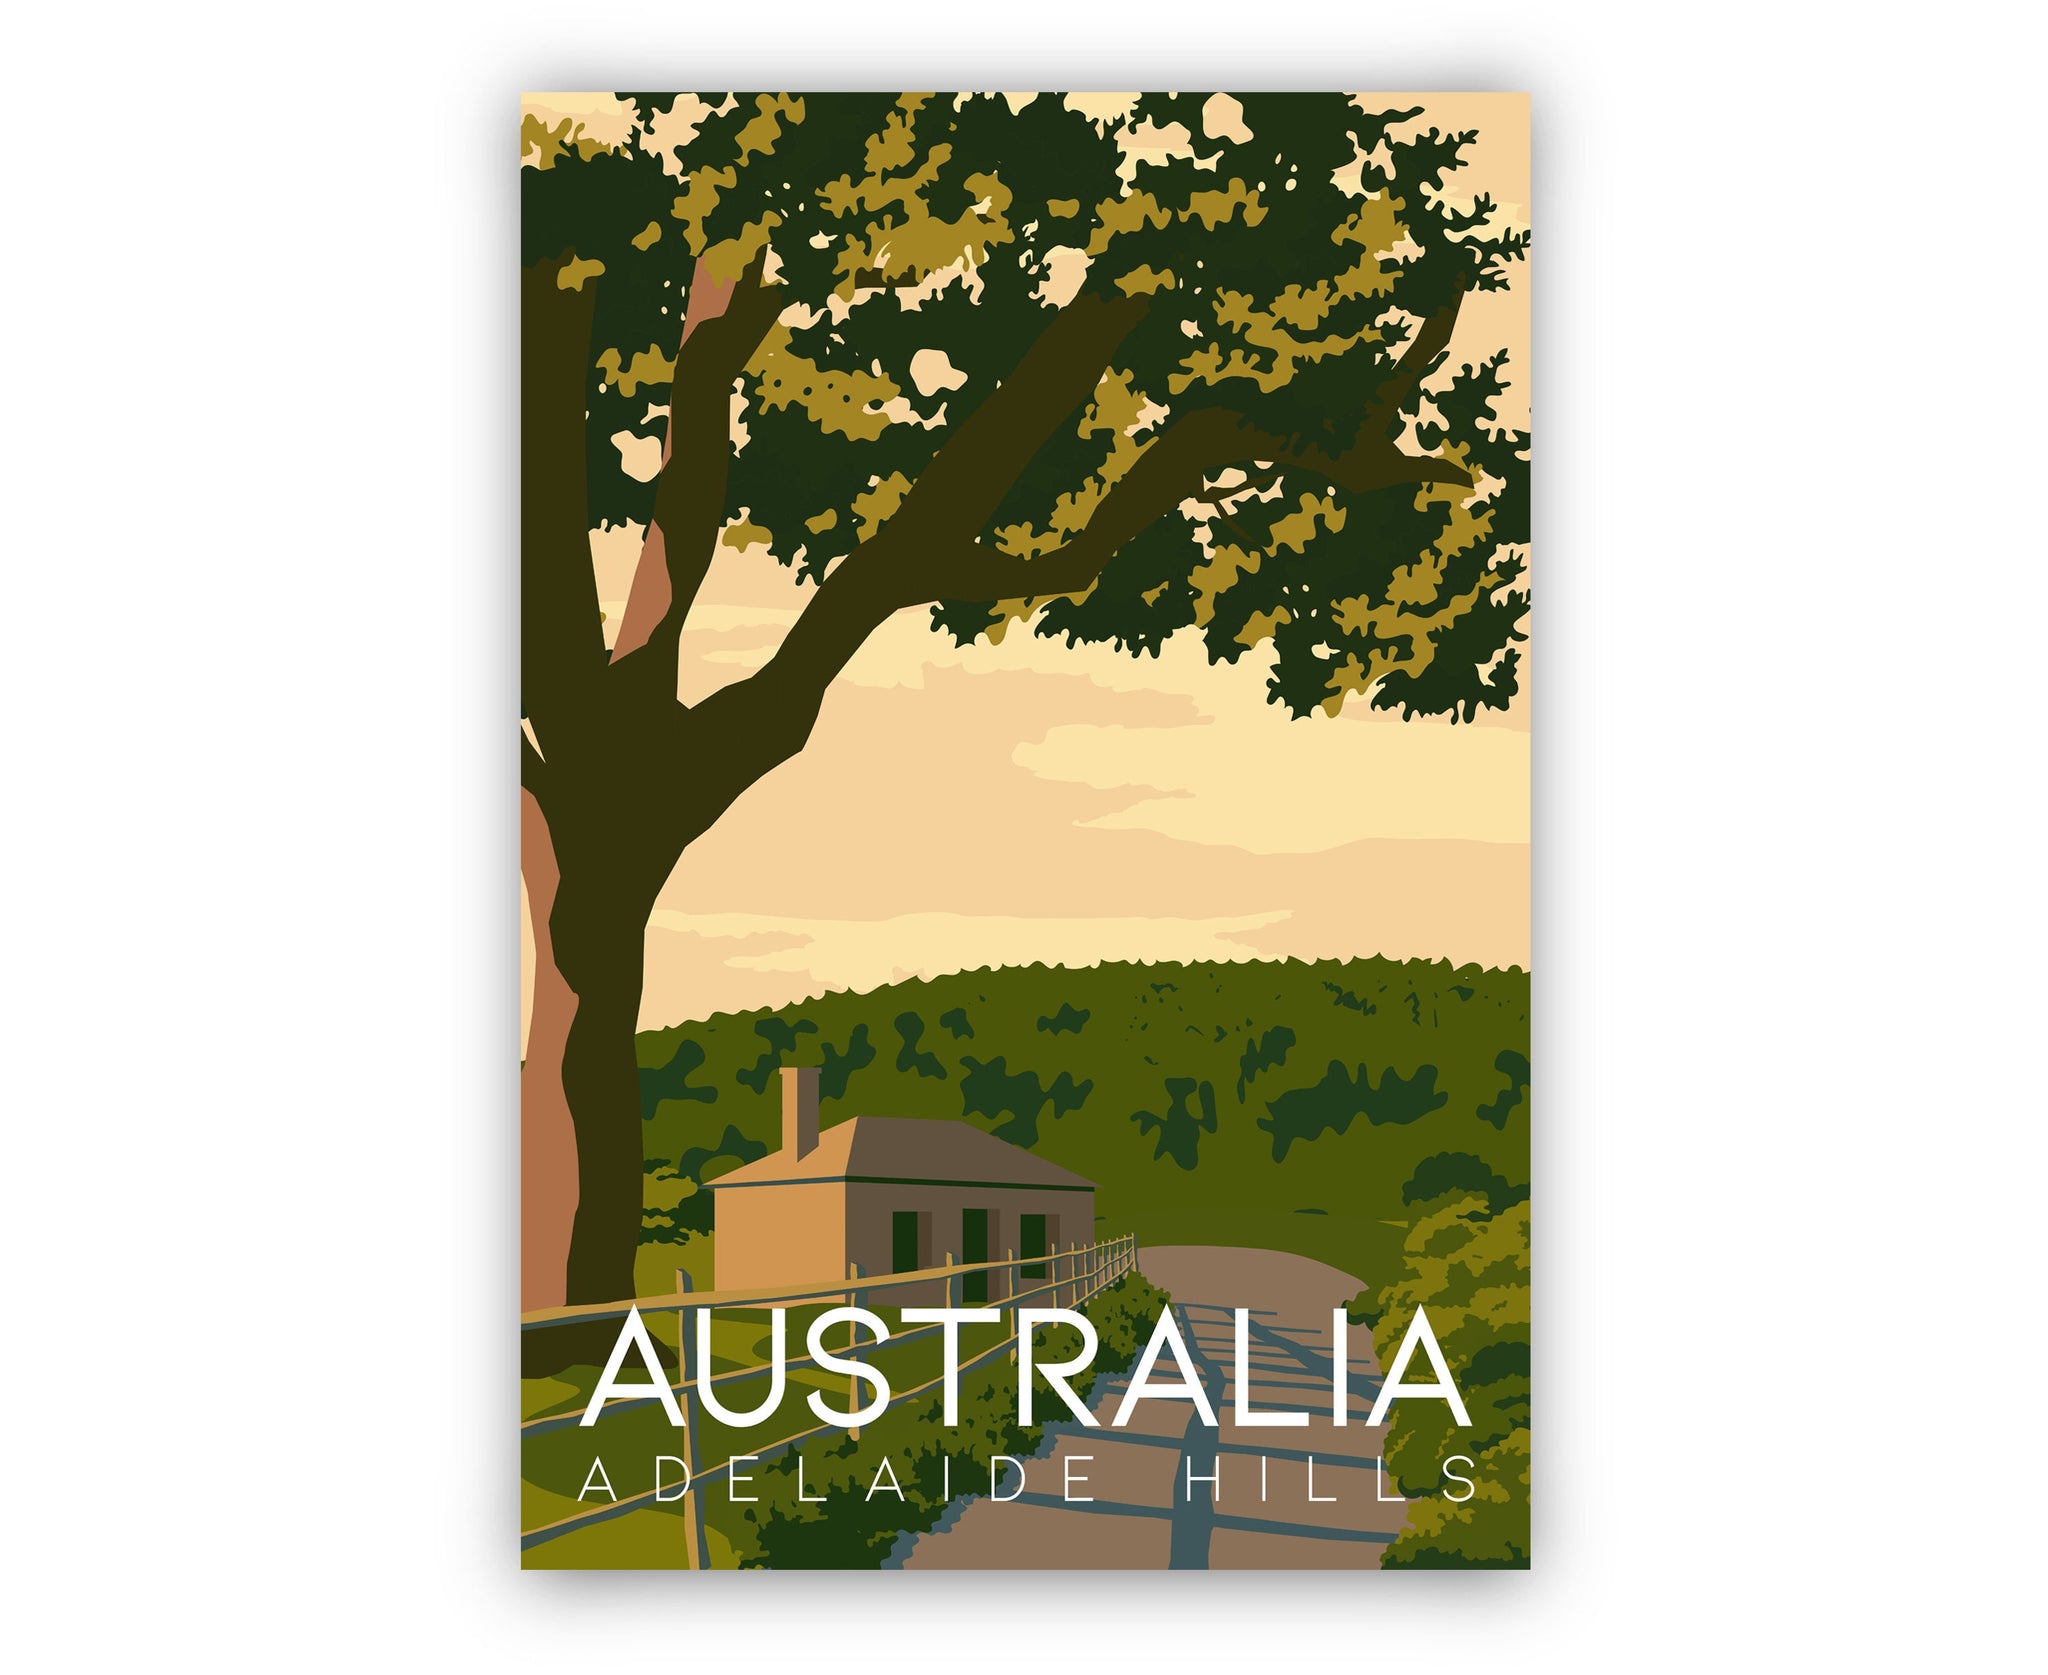 AUSTRALIA retro style travel poster, Adelaide Hills cityscape poster artwork, Australia landmark poster wall art, Office wall decoration